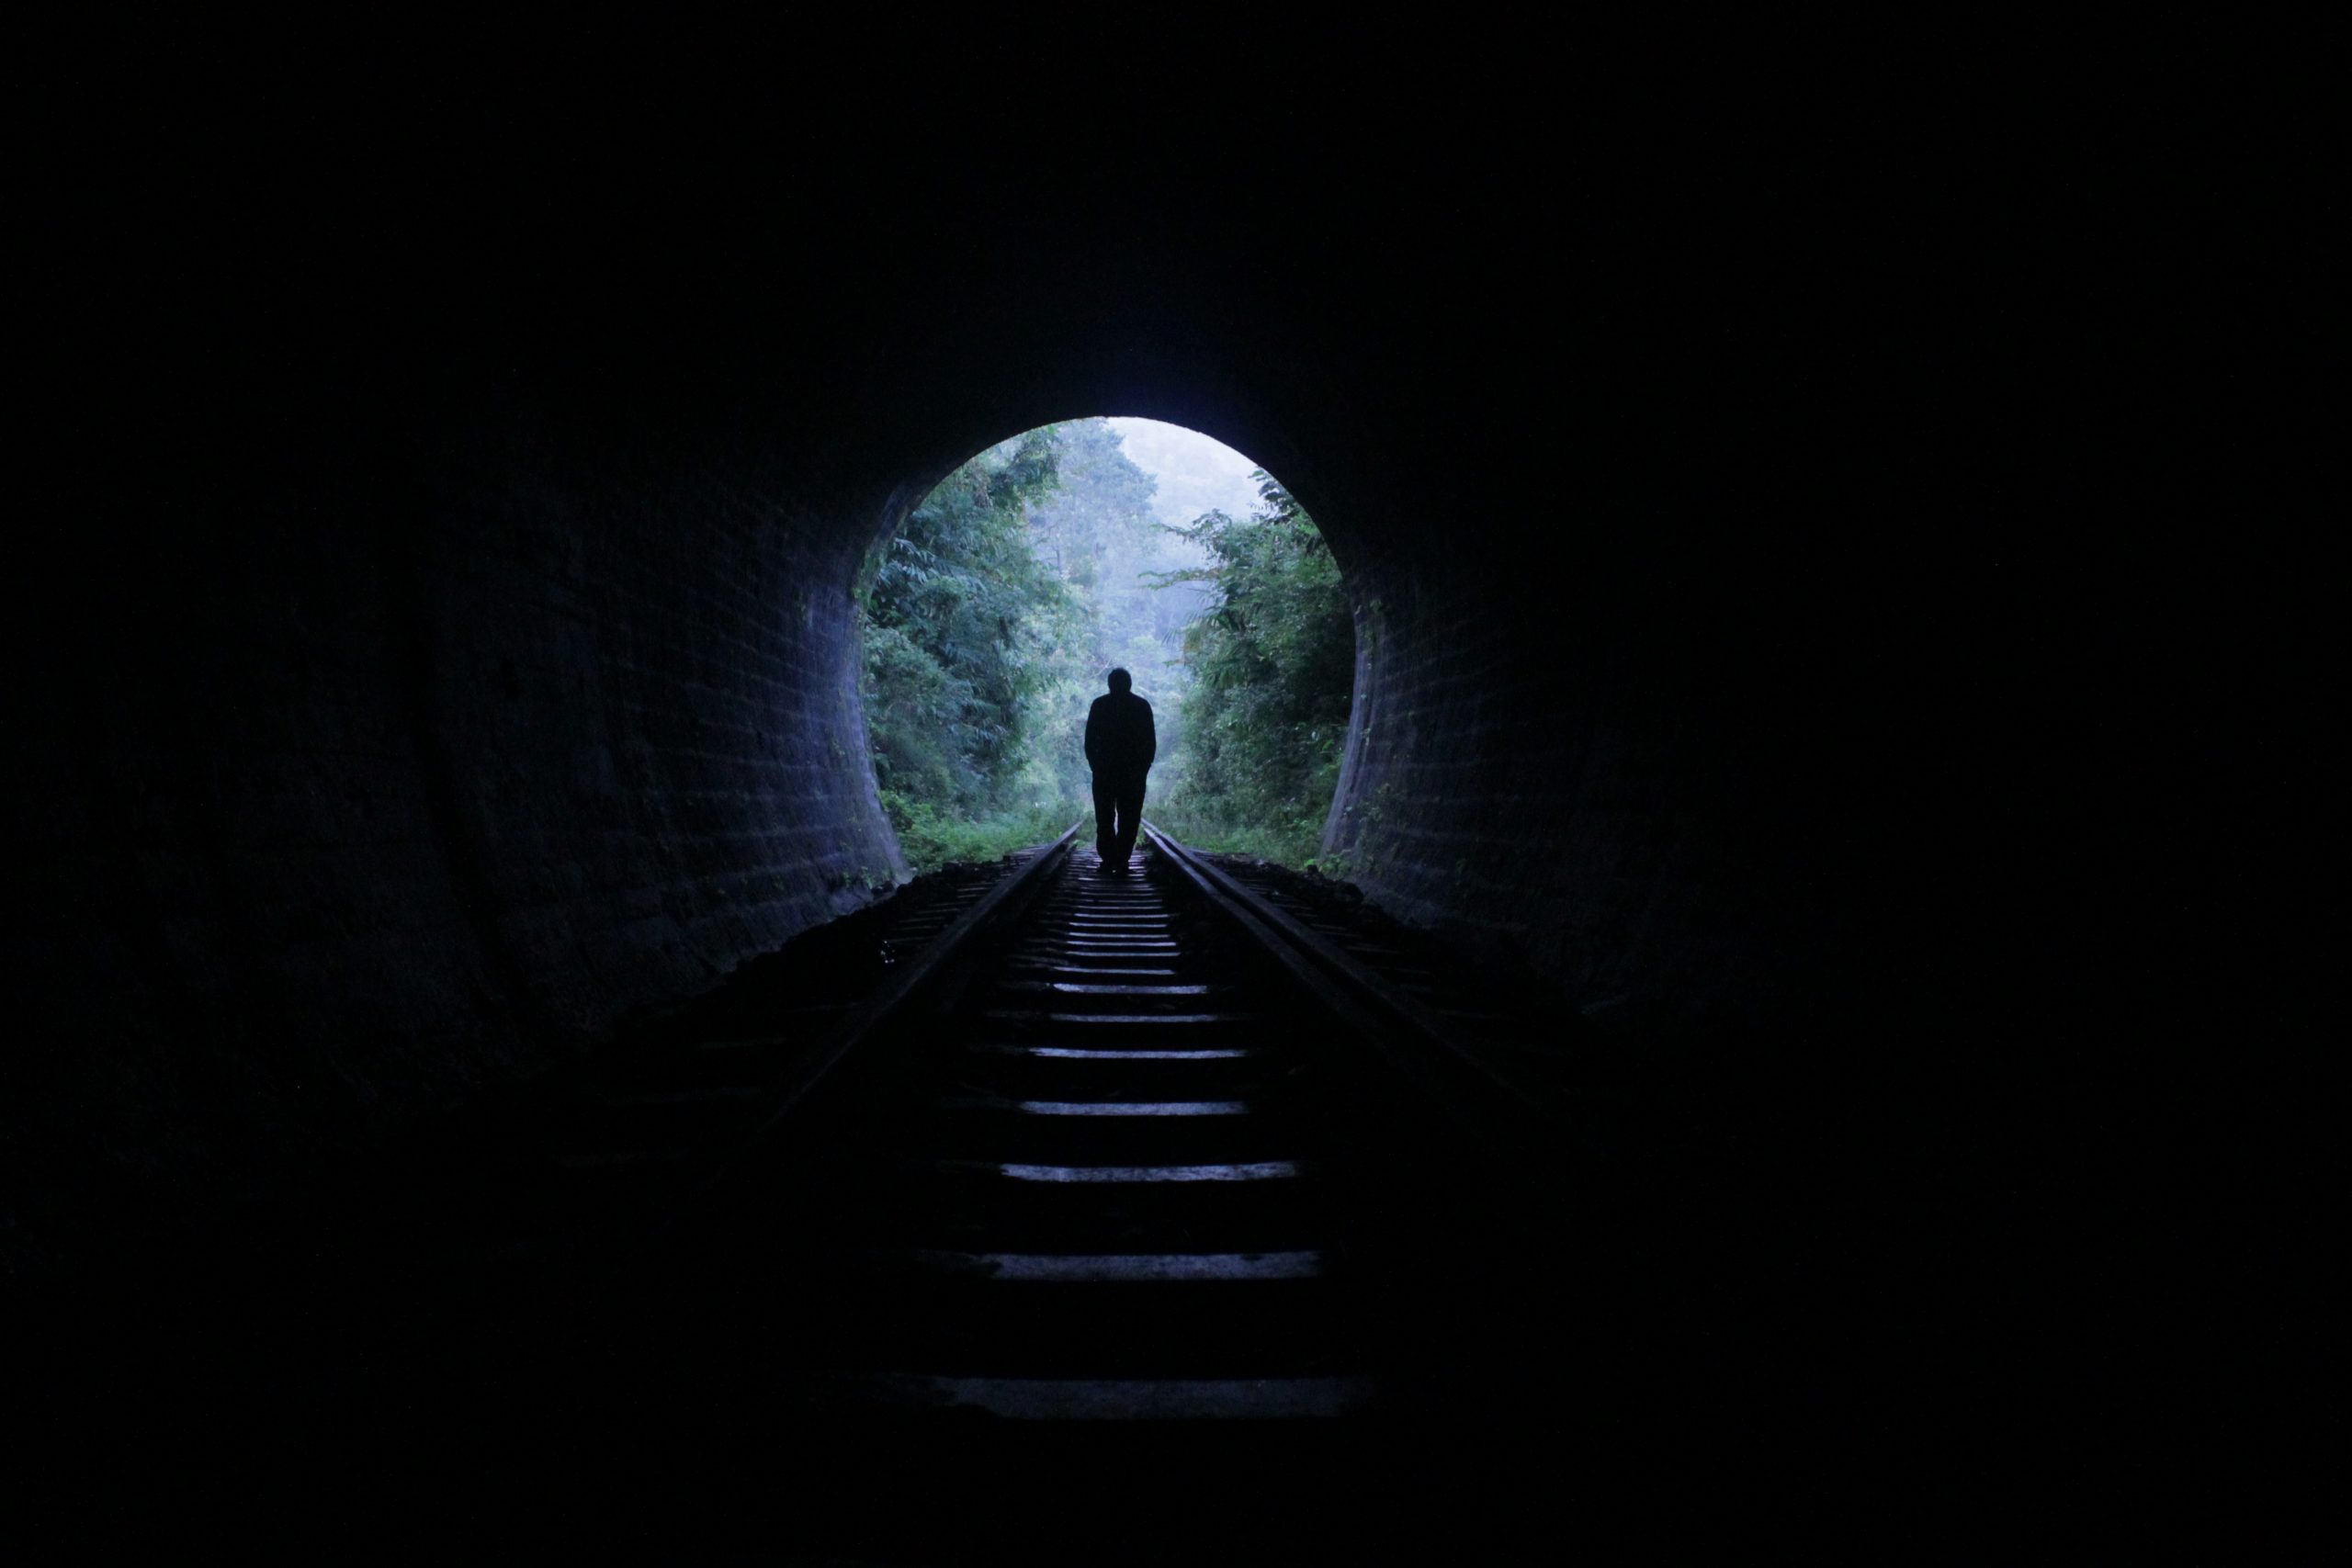 Railway tunnel